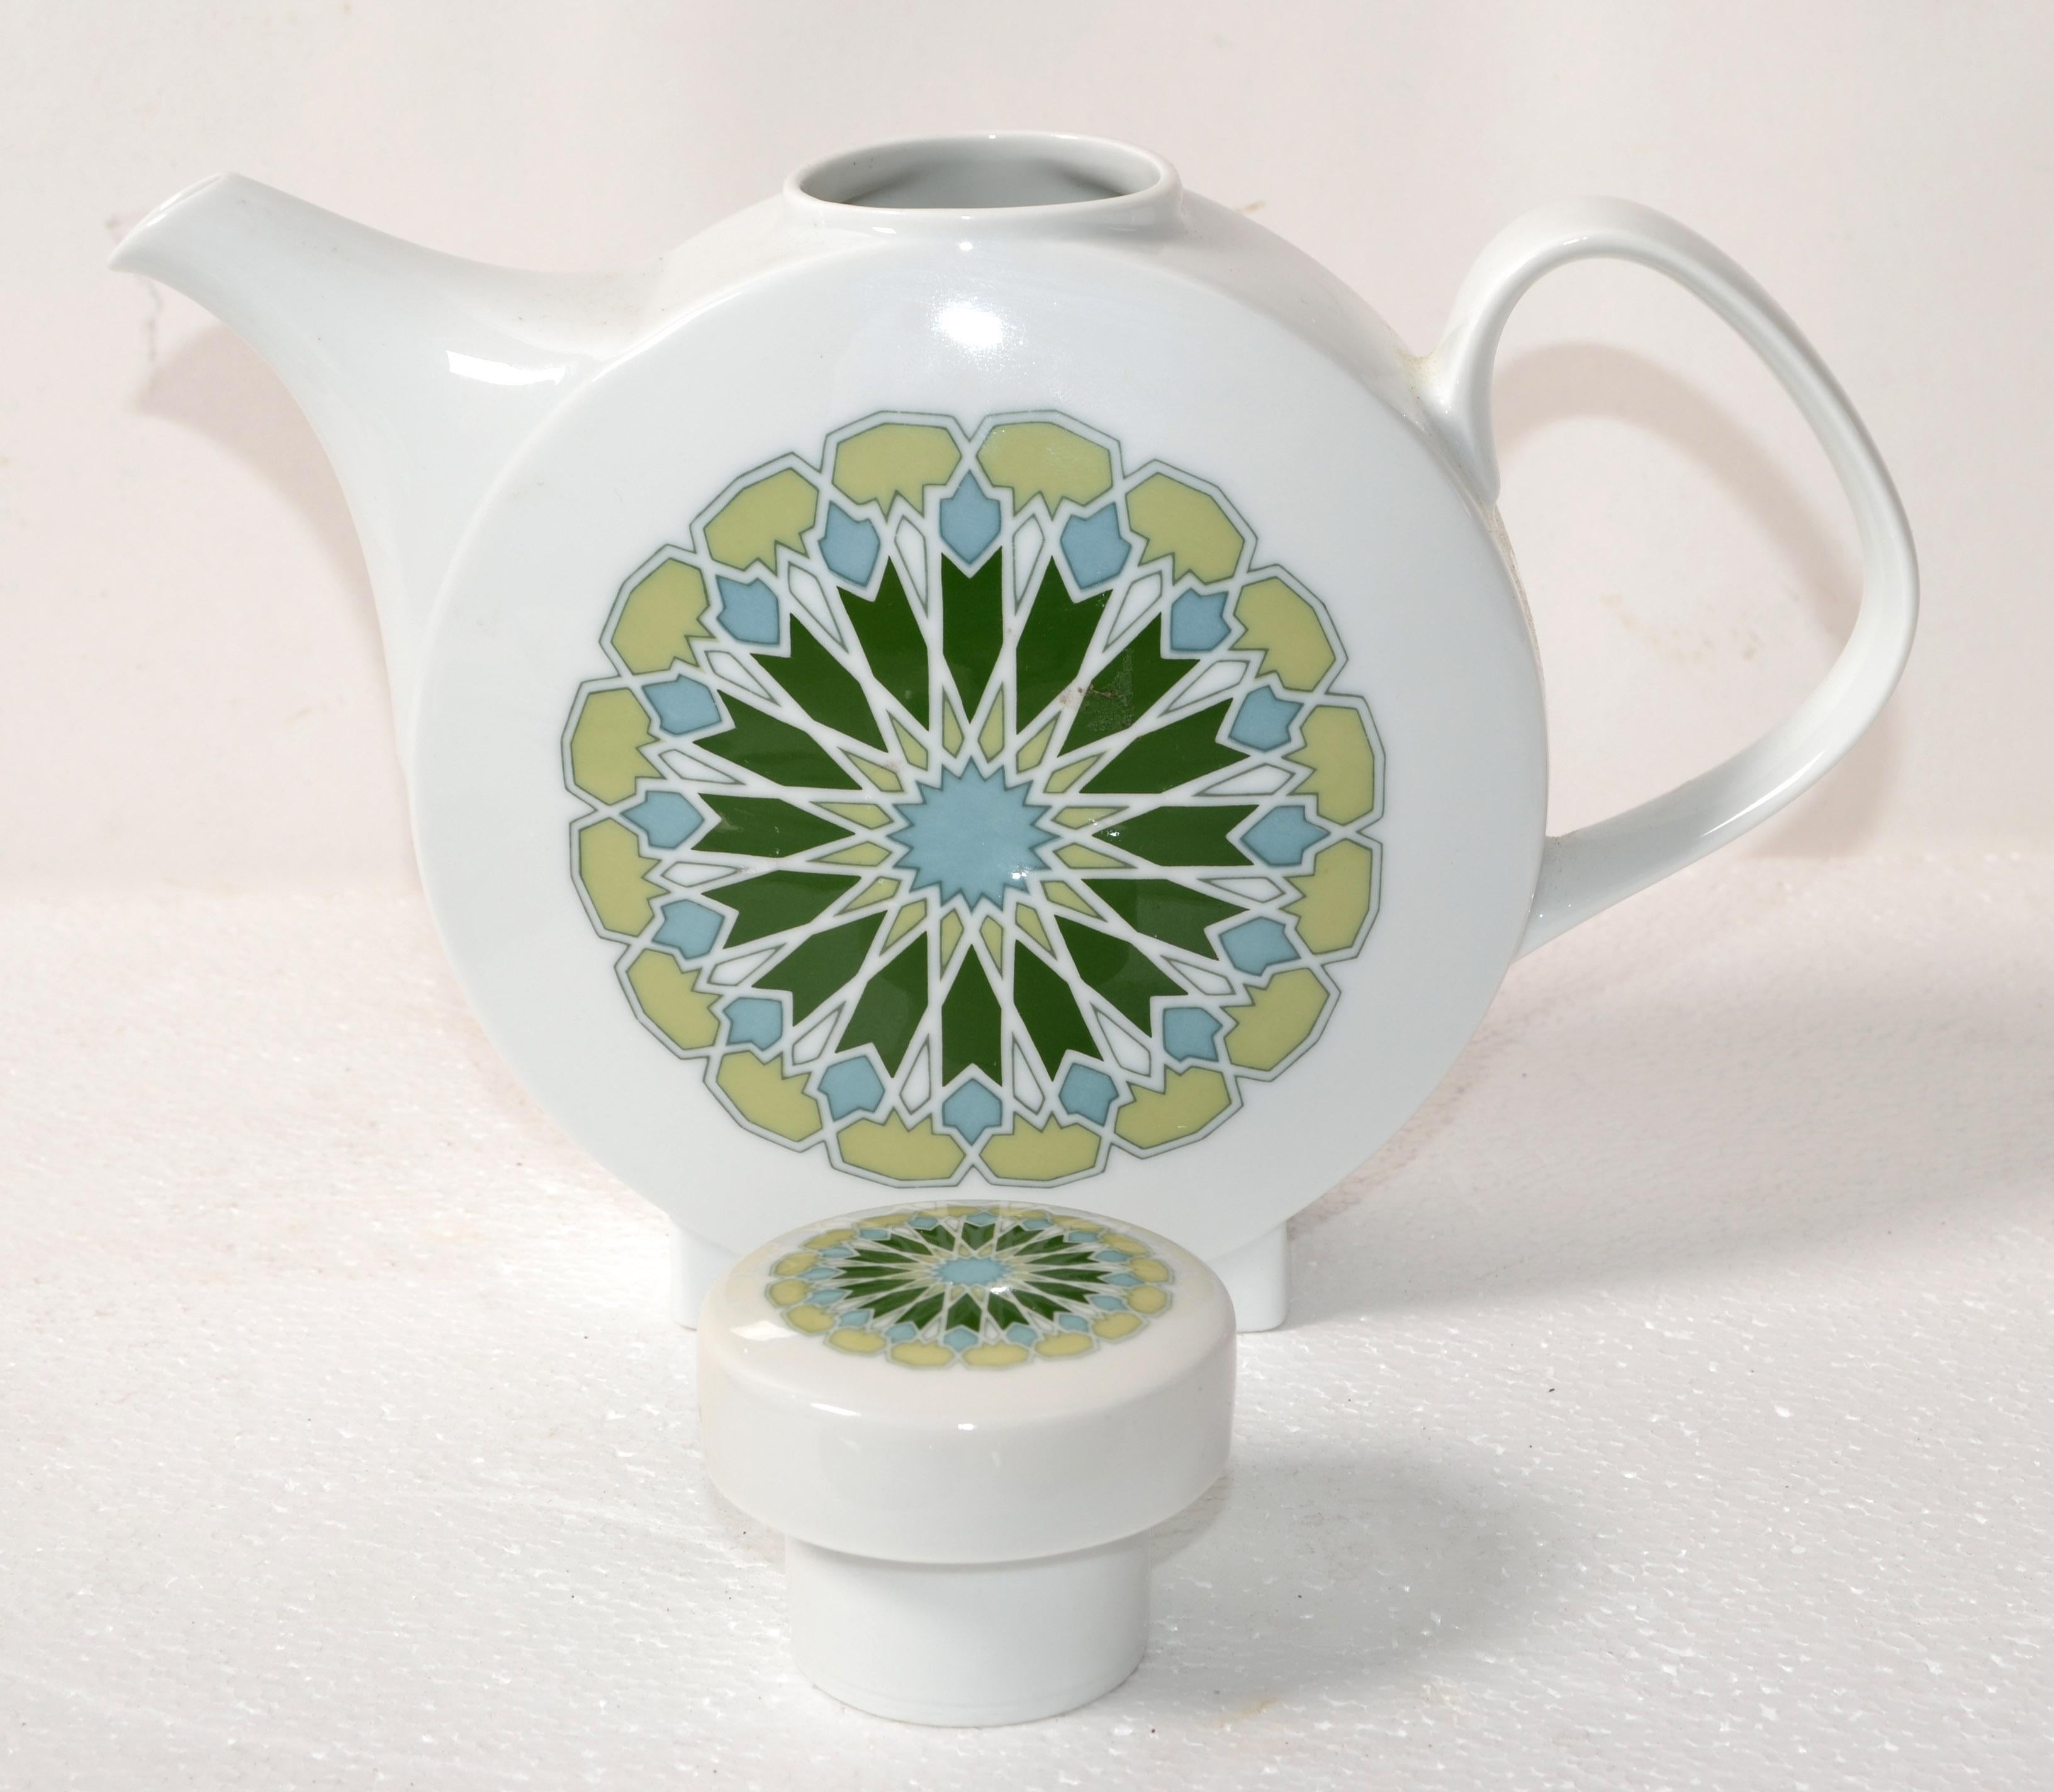 German Vintage Melitta Minden Porcelain Tee Service Green White Motif 4 Place Setting For Sale